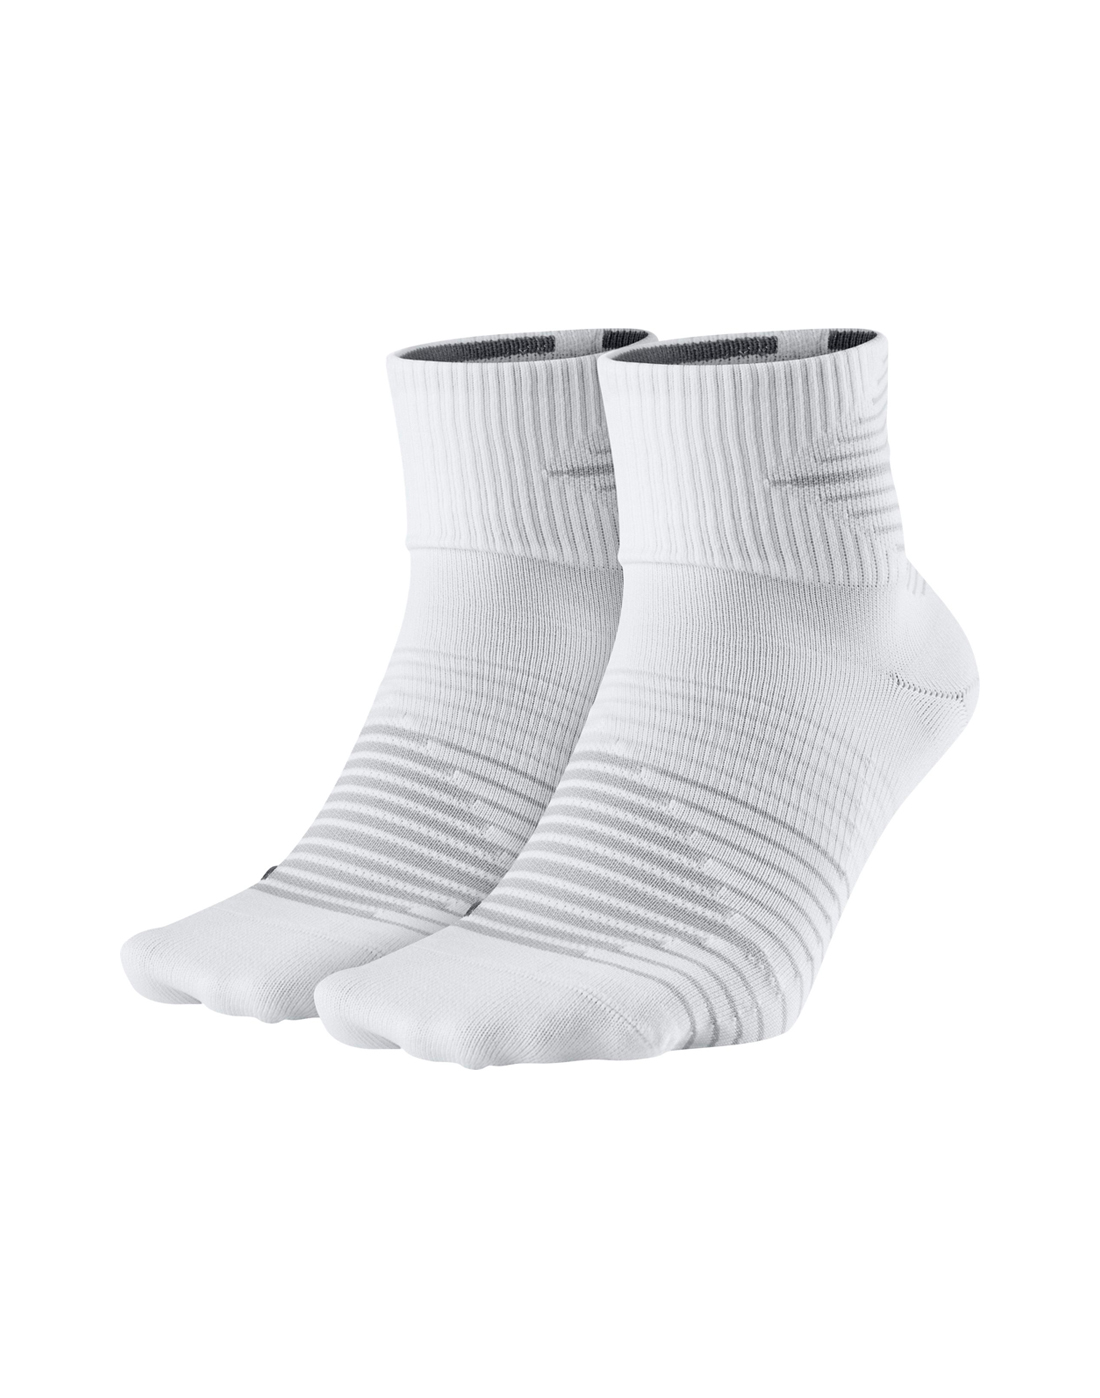 Nike Running Anti Blister Sock 2 Pack - White | Life Style Sports IE